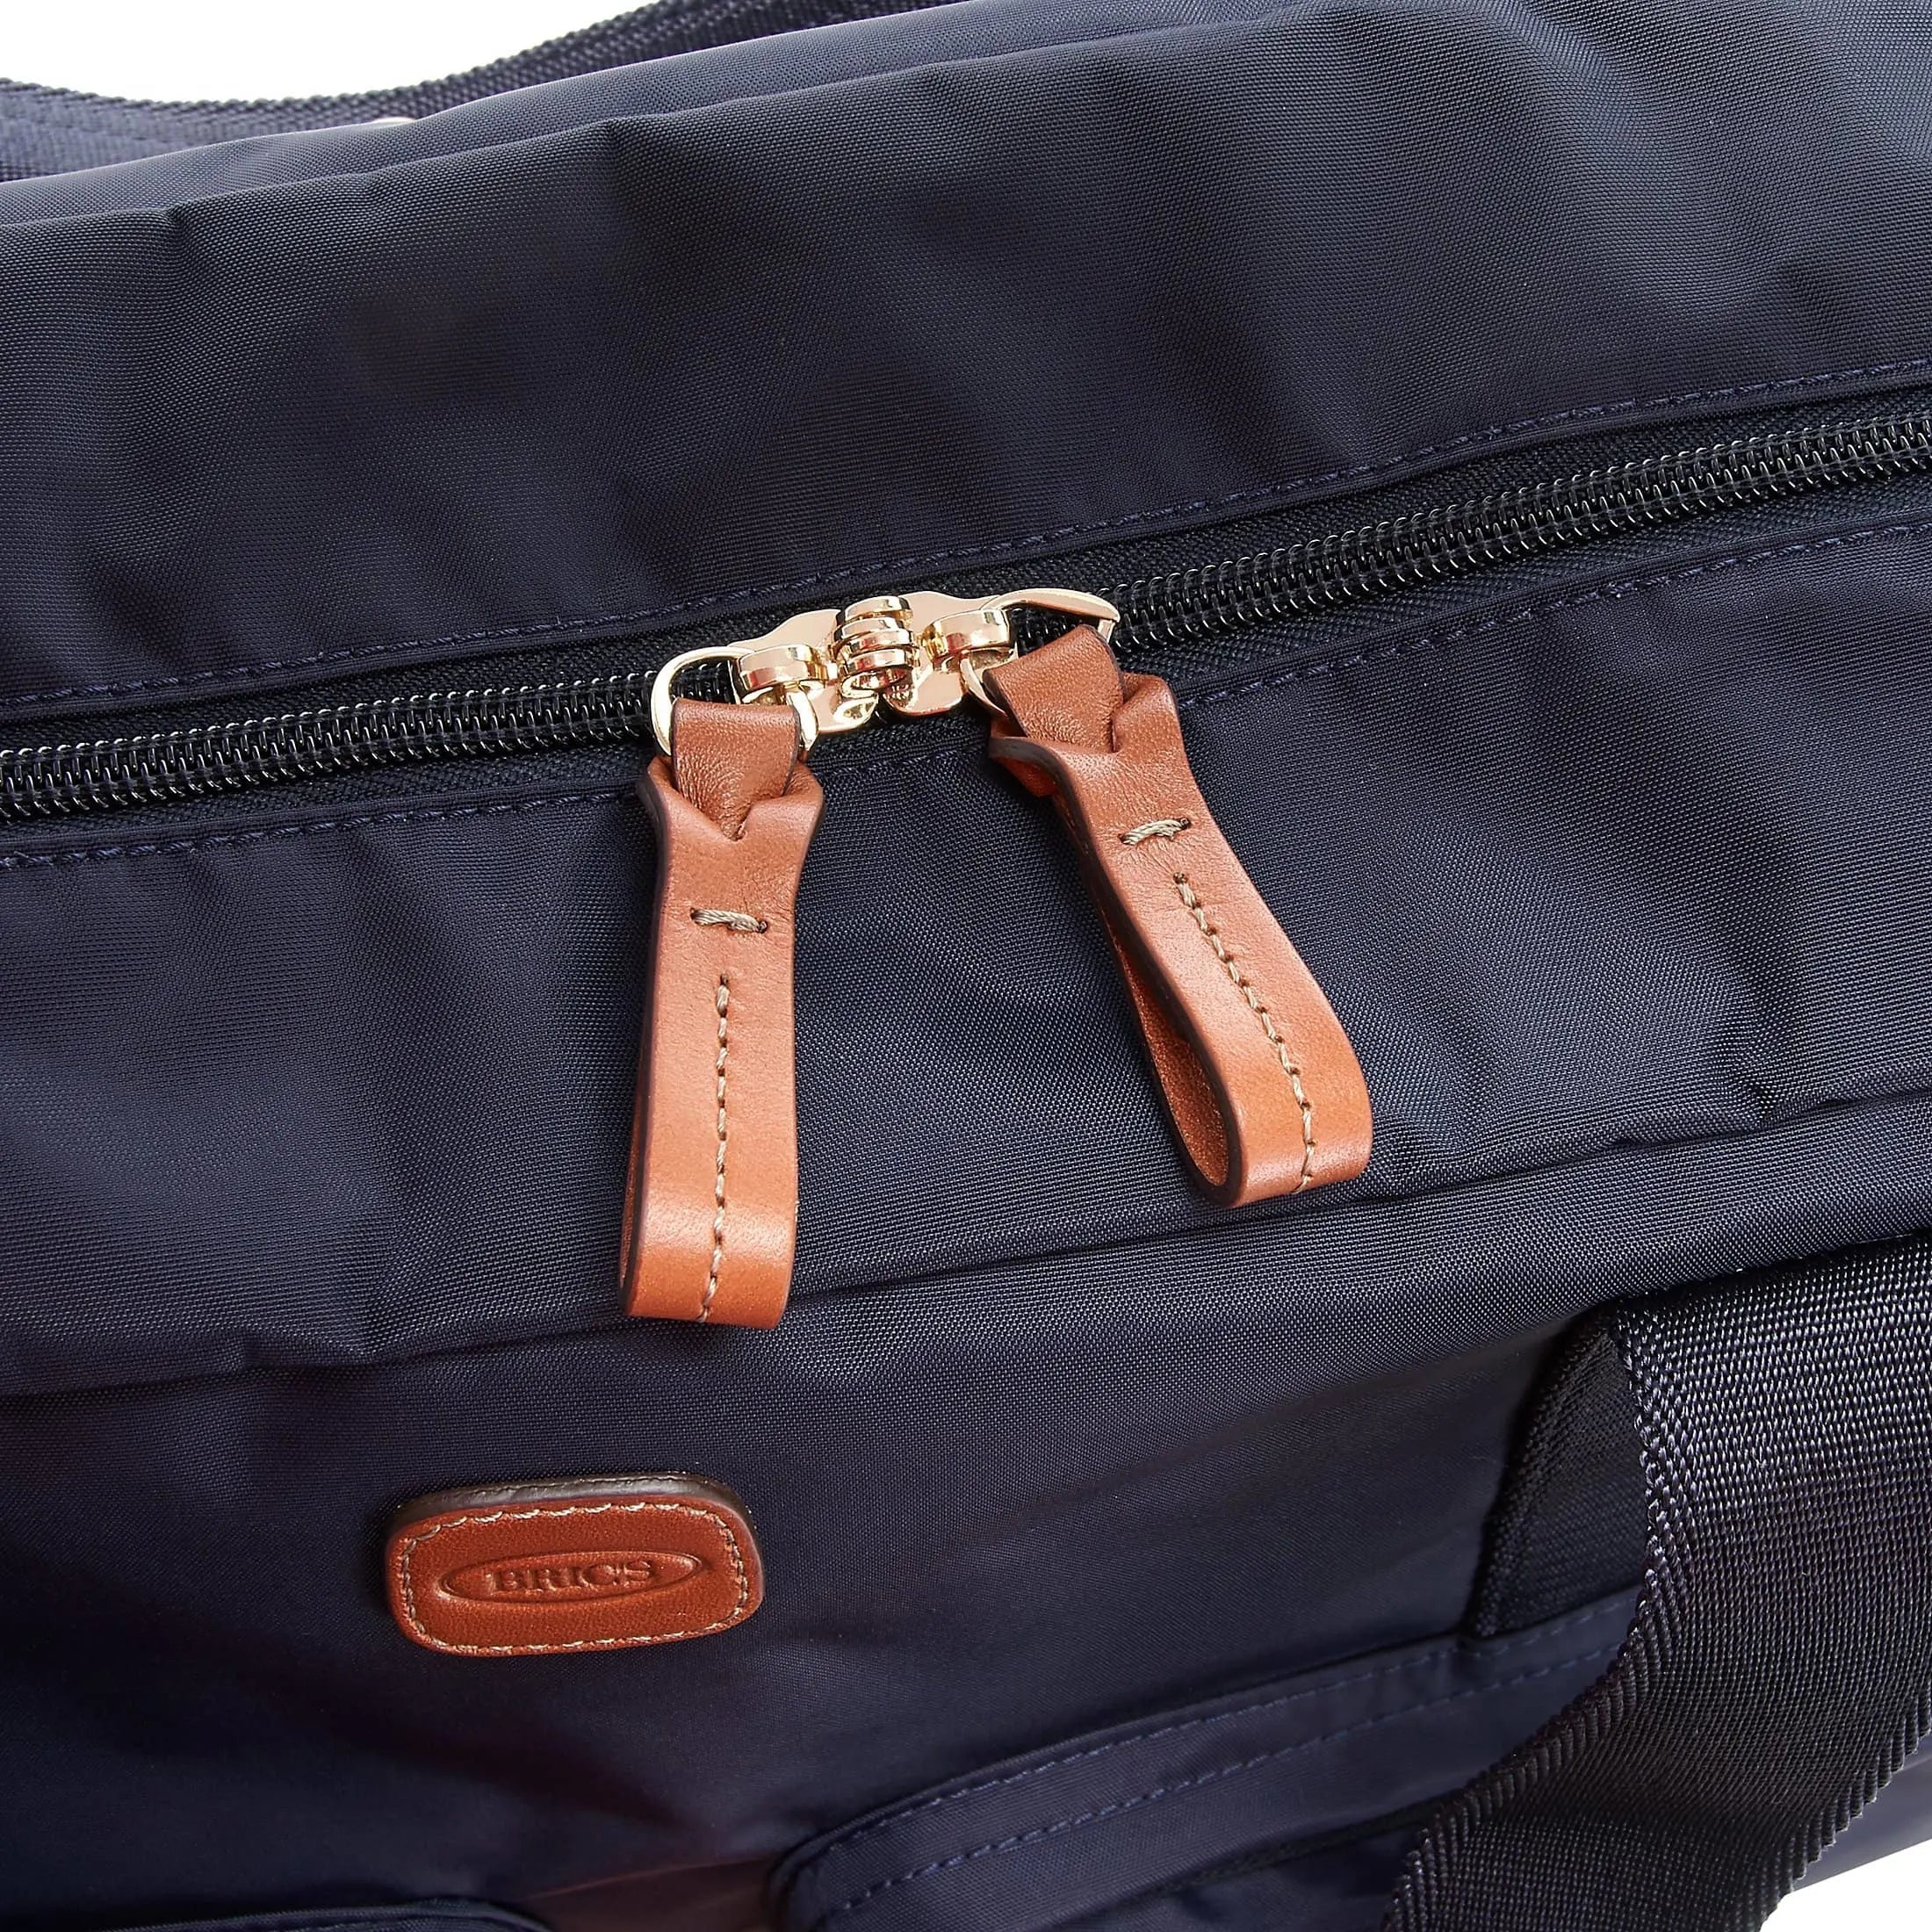 Brics X-Travel Holdall travel bag 46 cm - black